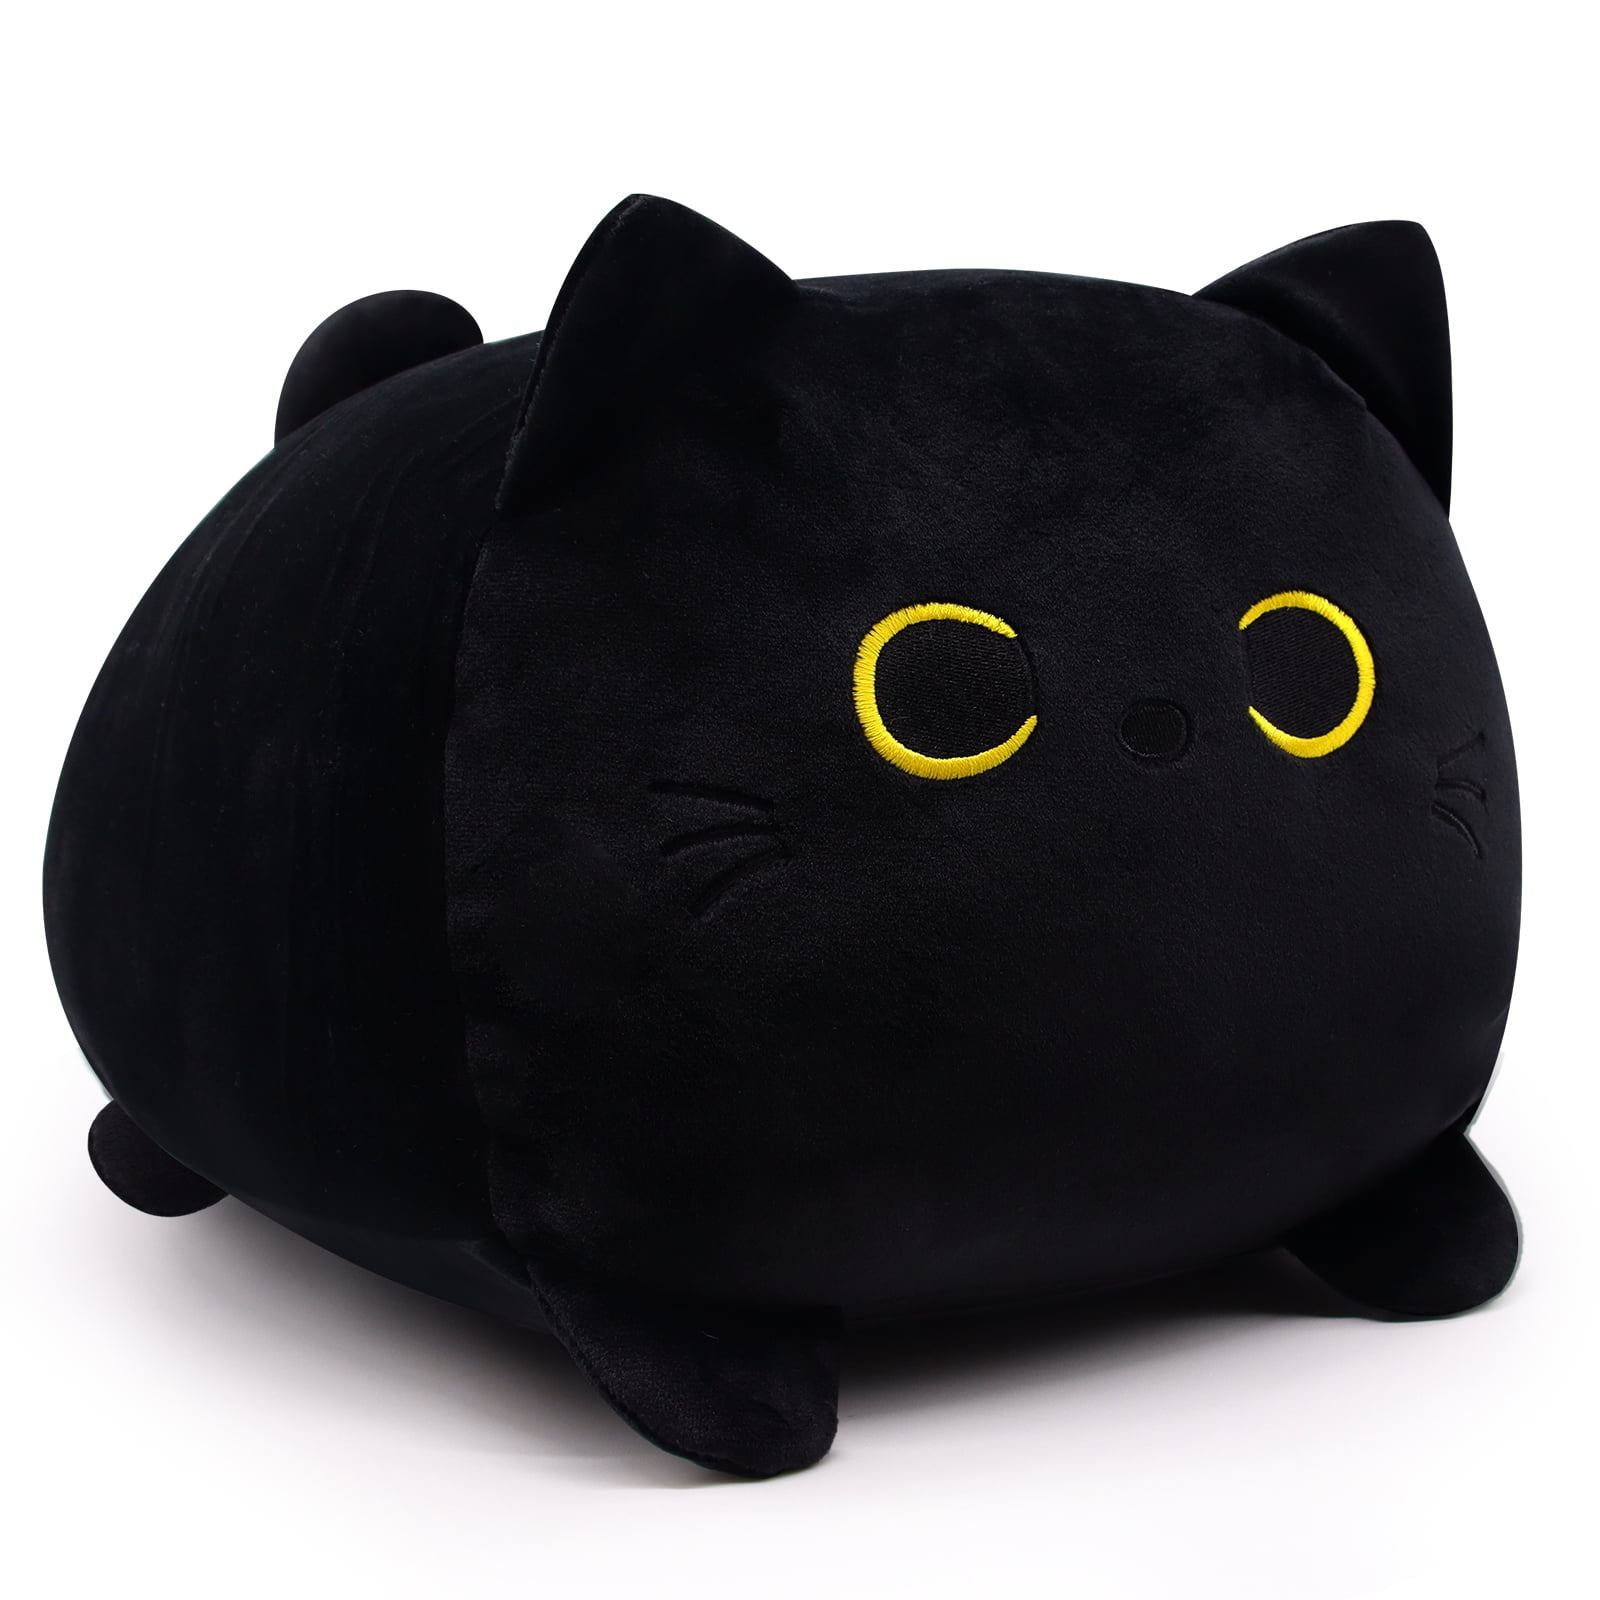 SUWJELANY Black Cat Stuffed Animals,15.7Kawaii Cat Plush Pillow,Soft Plush  Toys Doll,Gift for Kids and Adults Christmas Birthdays Halloween 